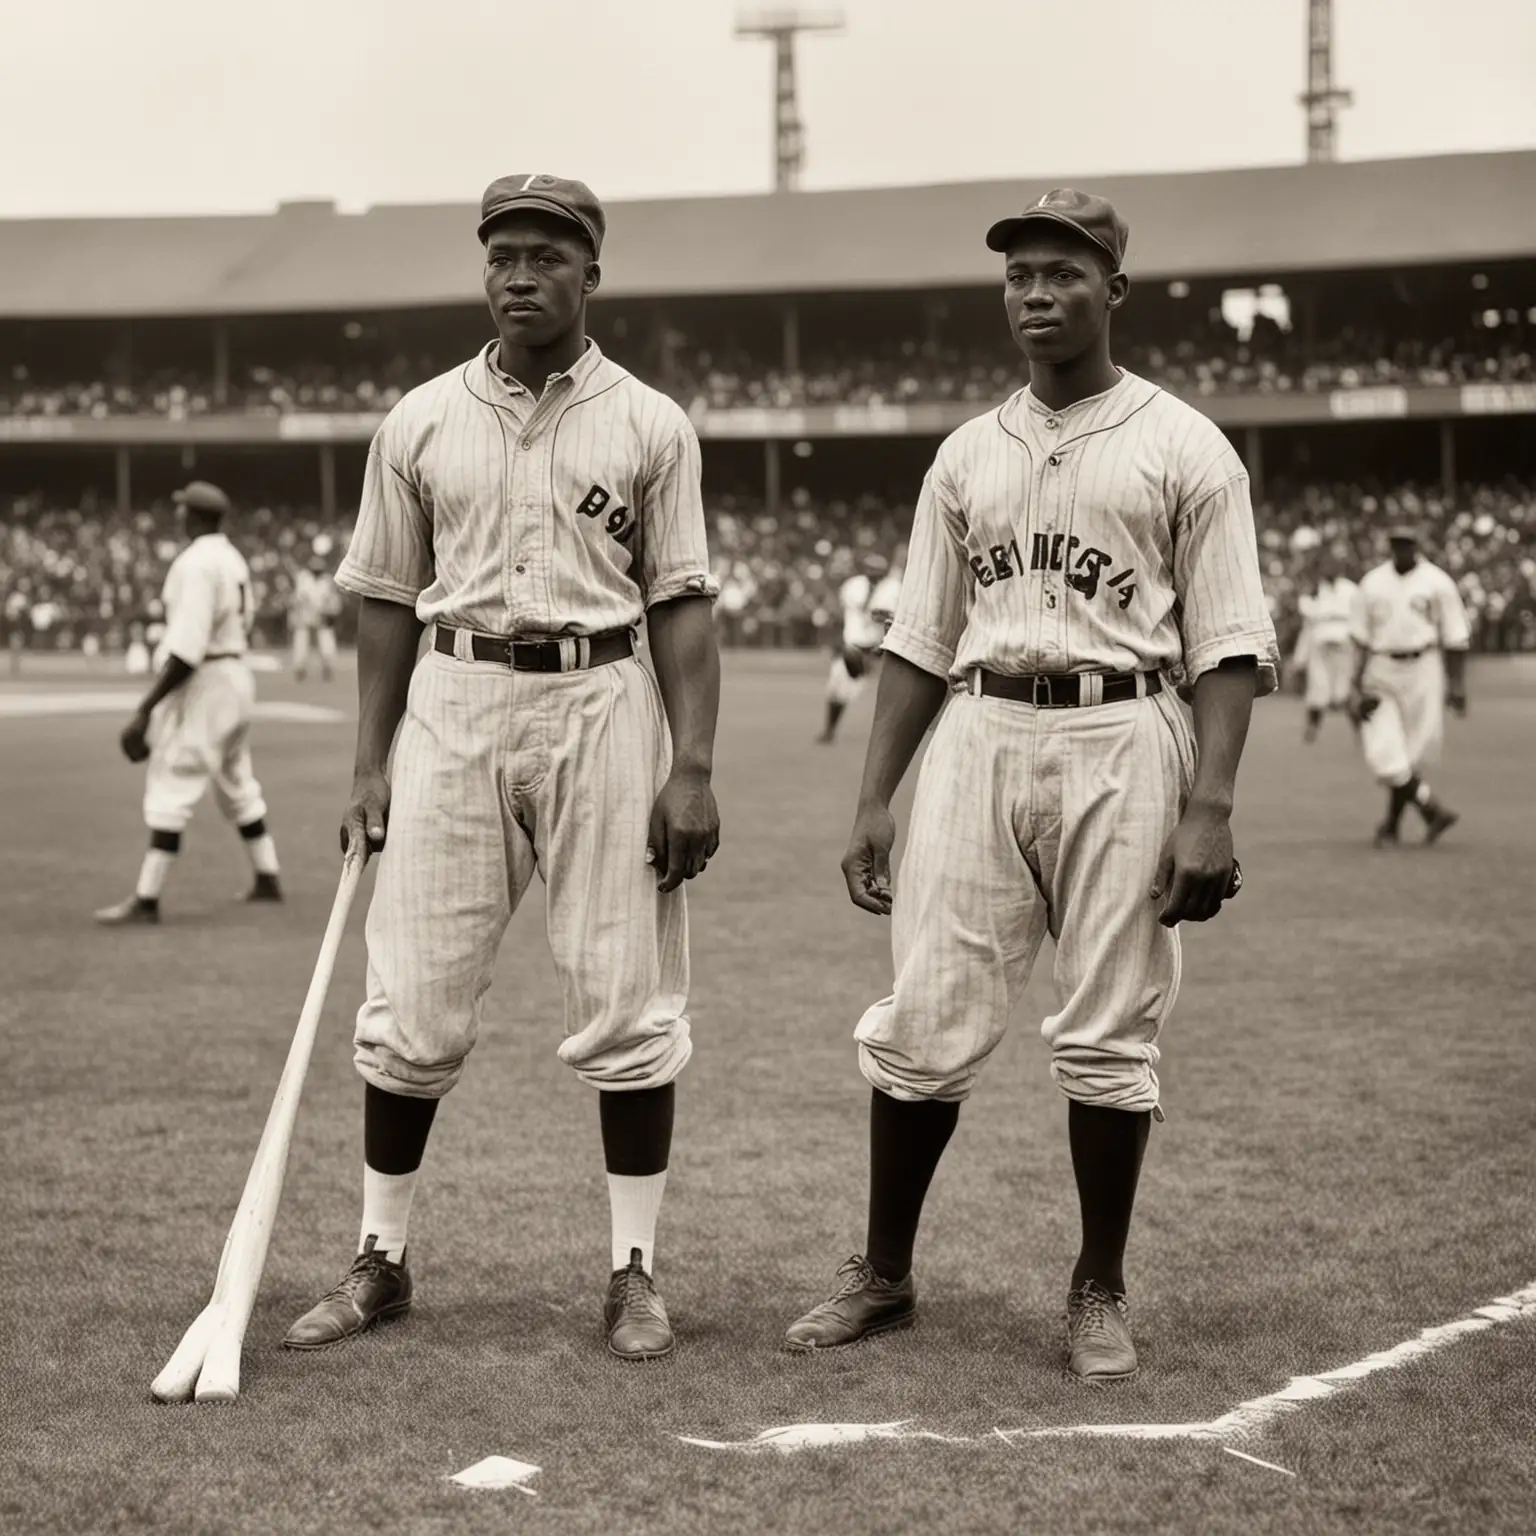  African American baseball game, 1931